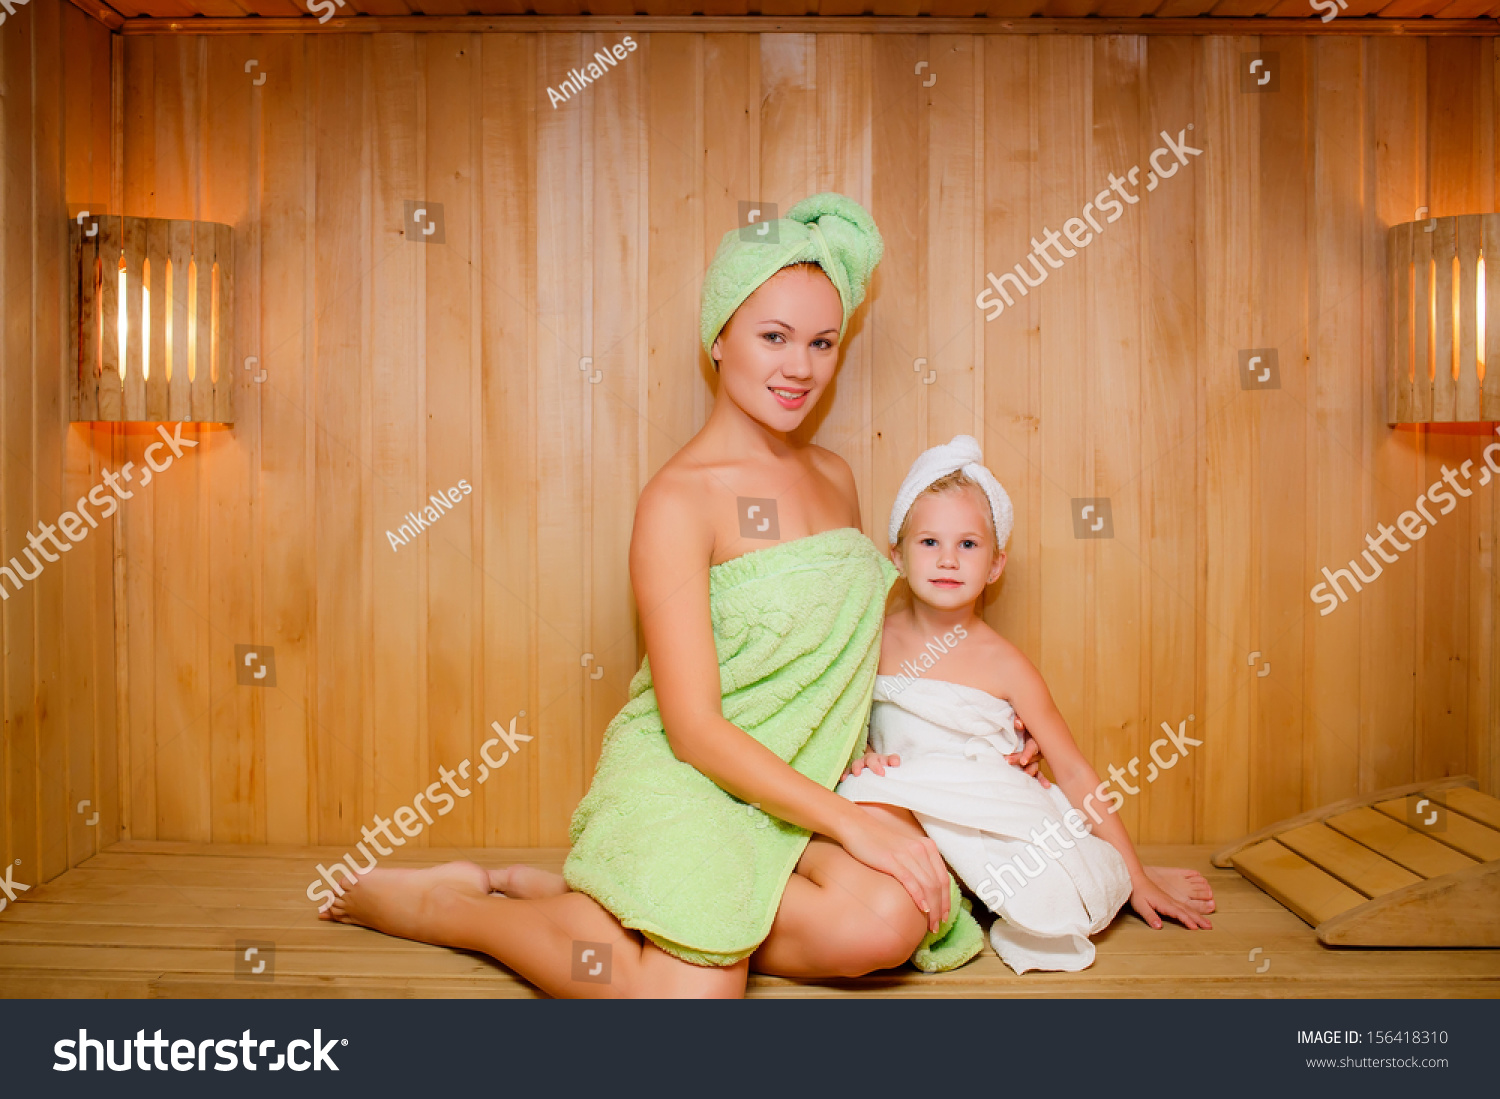 в бане голыми дети и родители фото 77